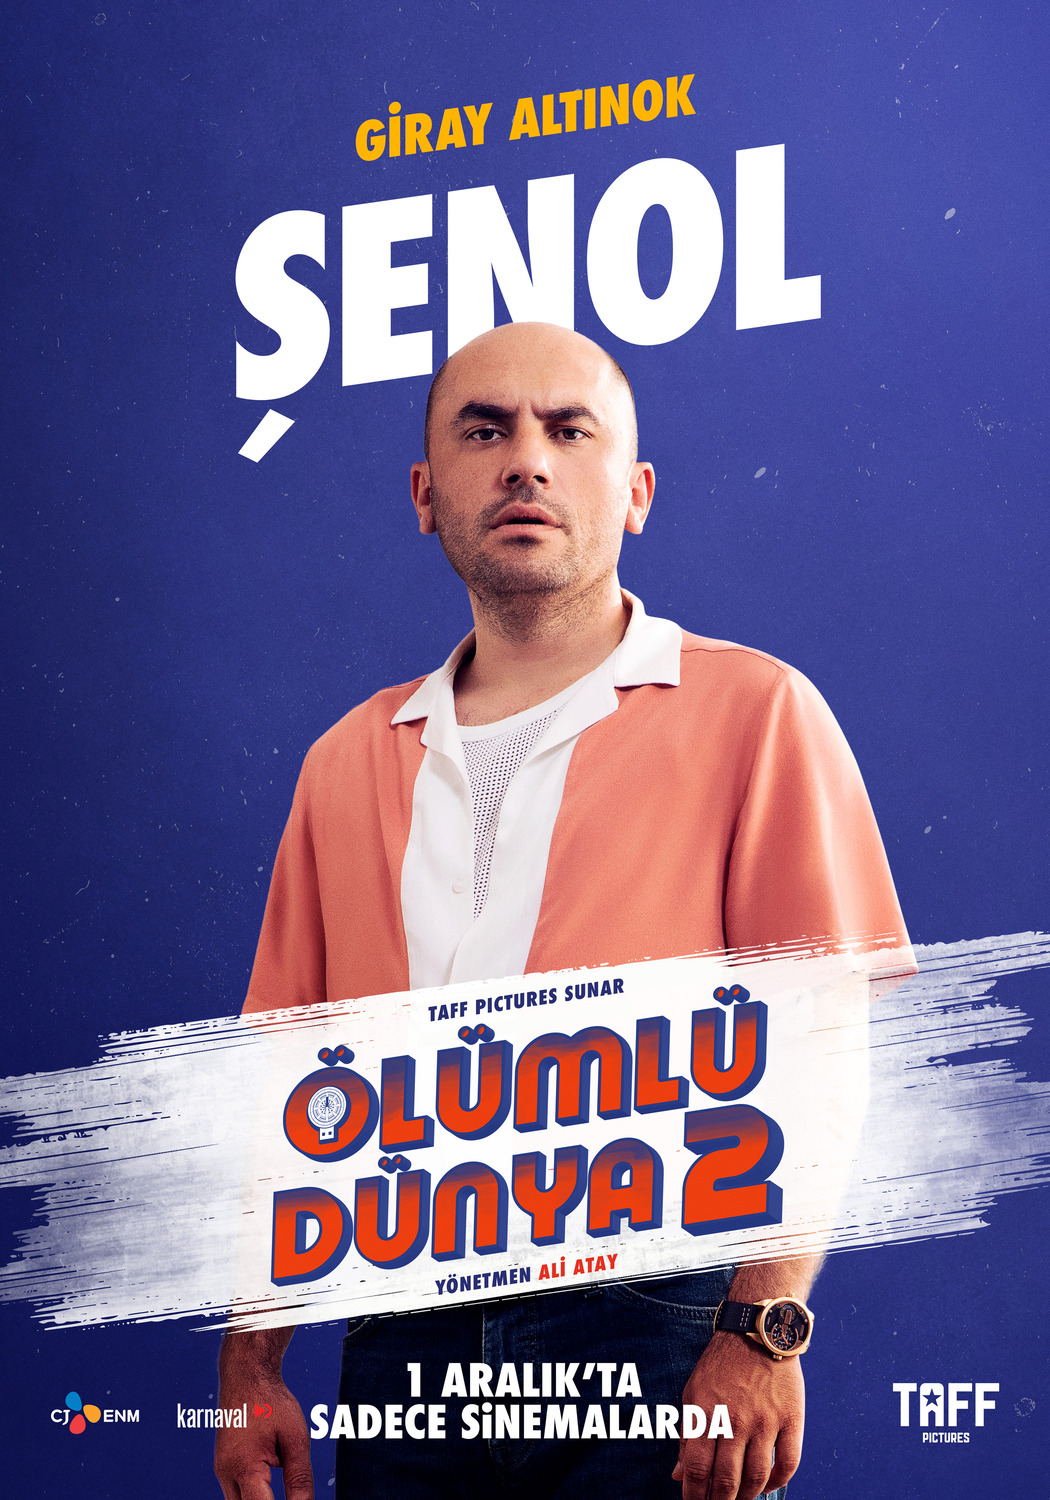 Extra Large Movie Poster Image for Ölümlü Dünya 2 (#7 of 11)